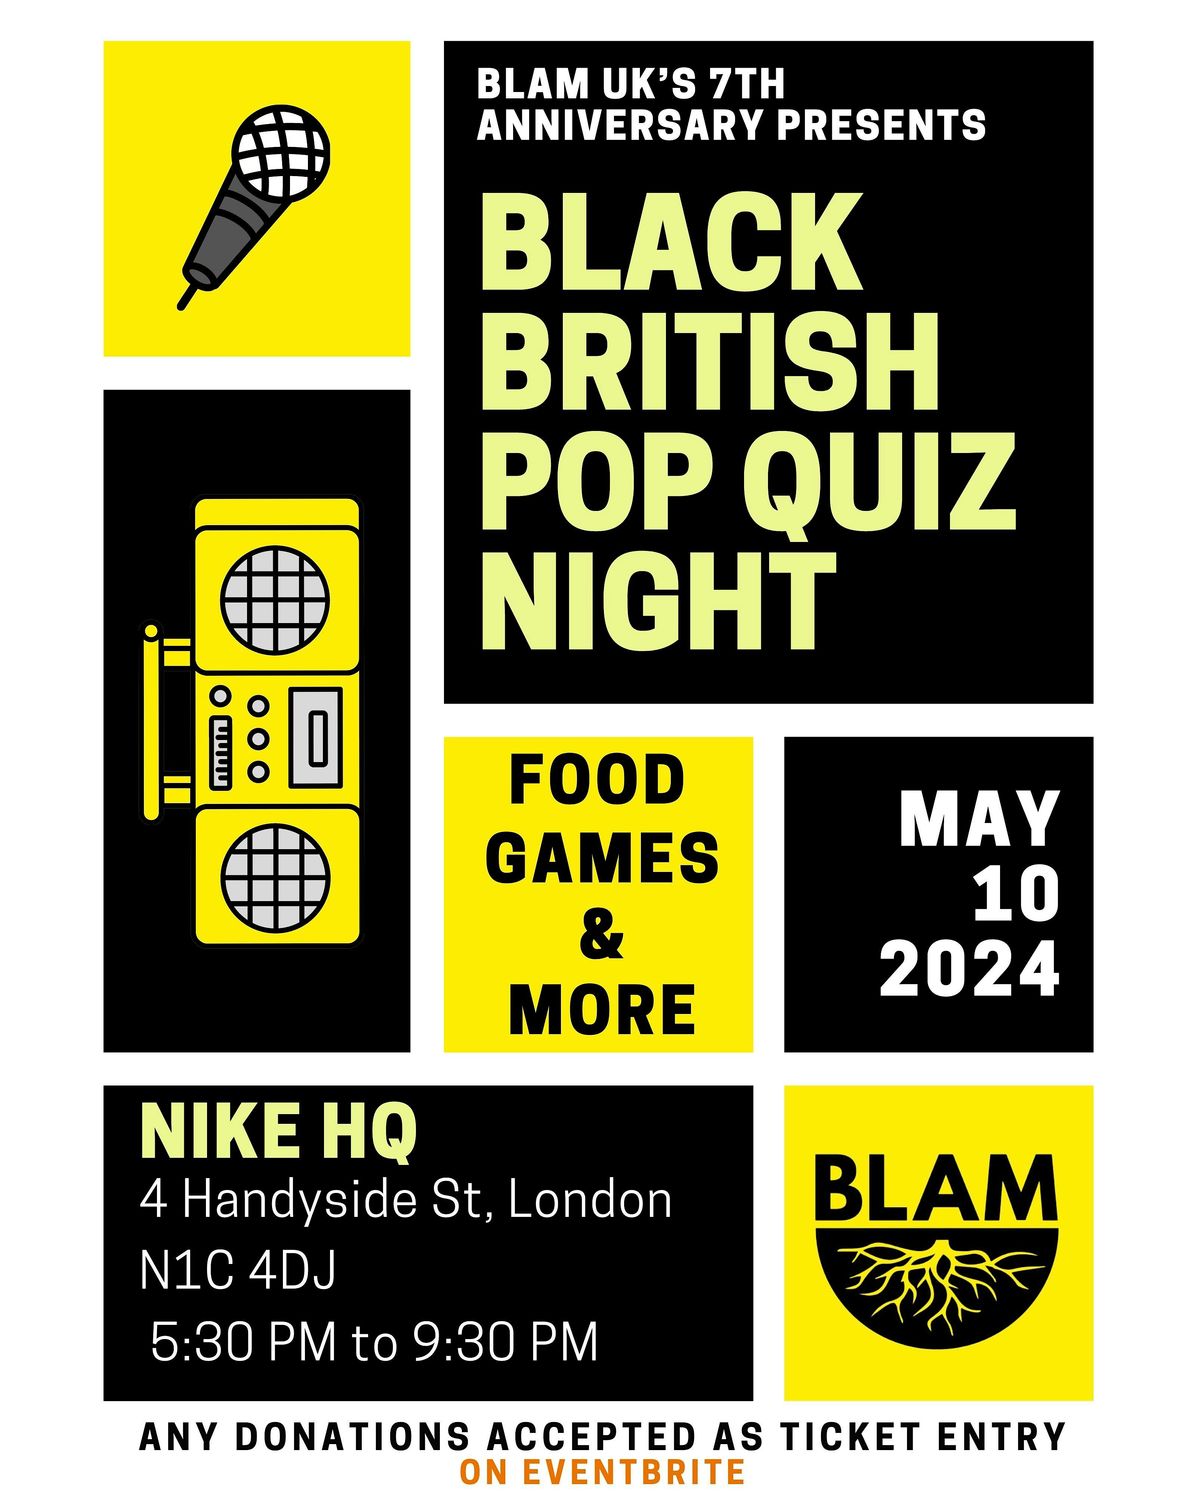 BLAMS 7th Anniversary: BLACK BRITISH POP QUIZ